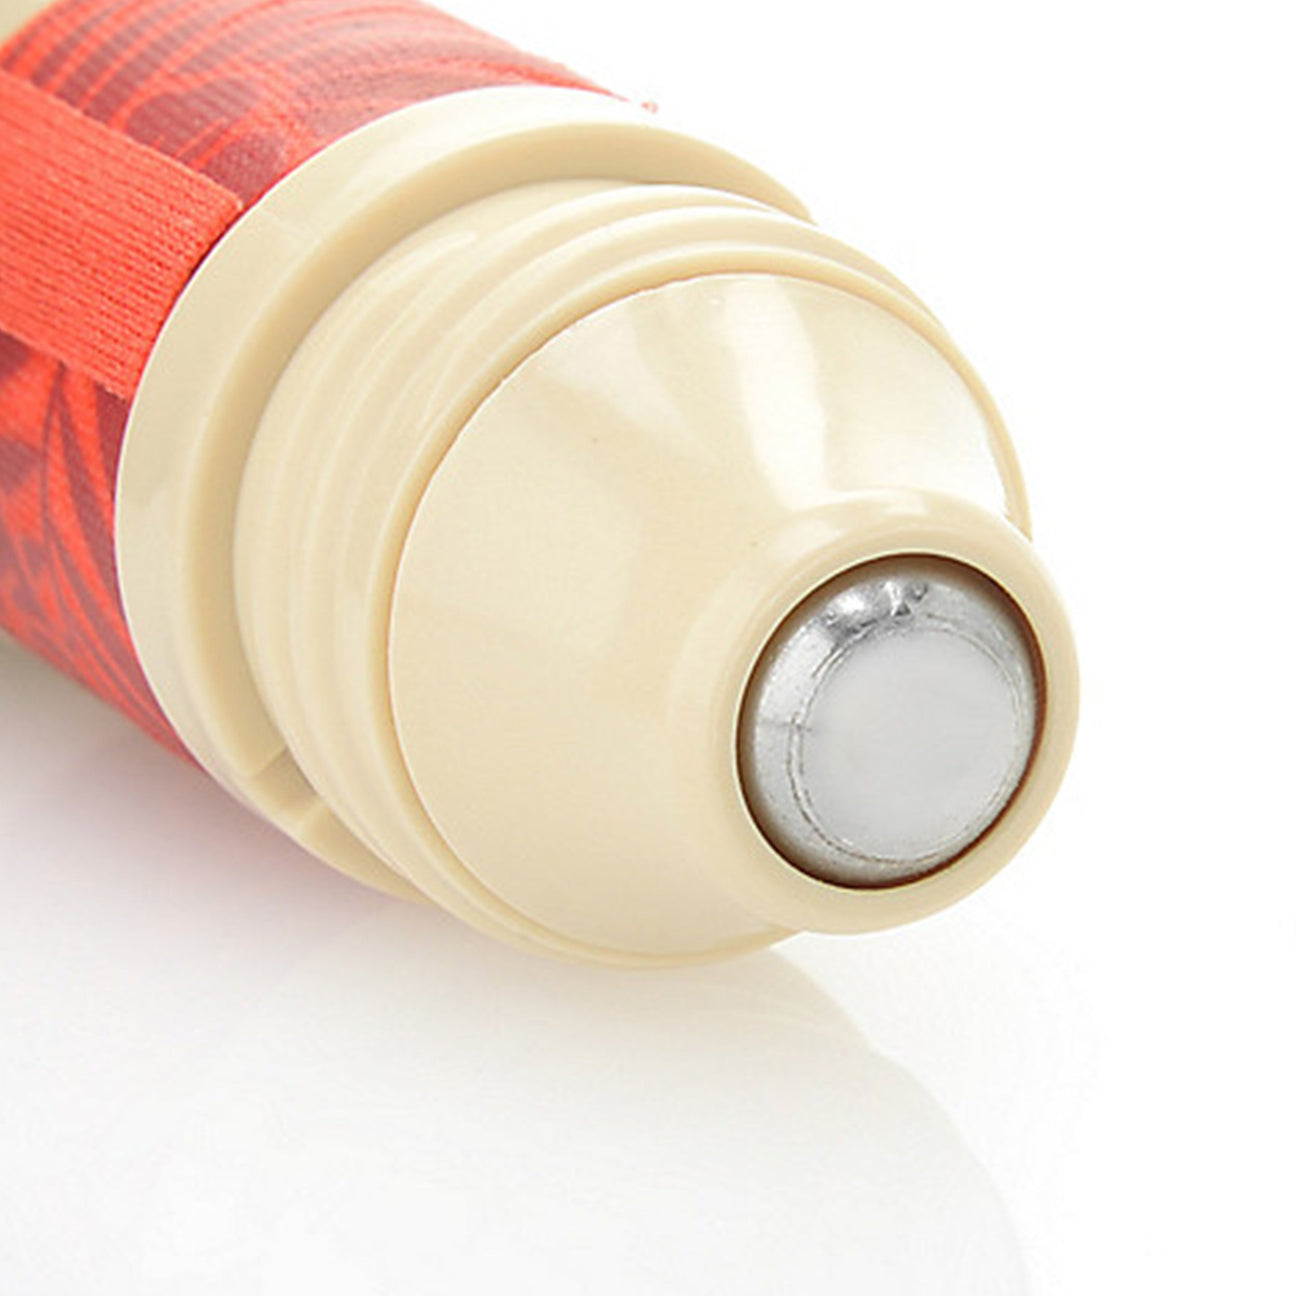 Para Kito Mosquito Repellent Roll-On Applicator Pen – .67 oz